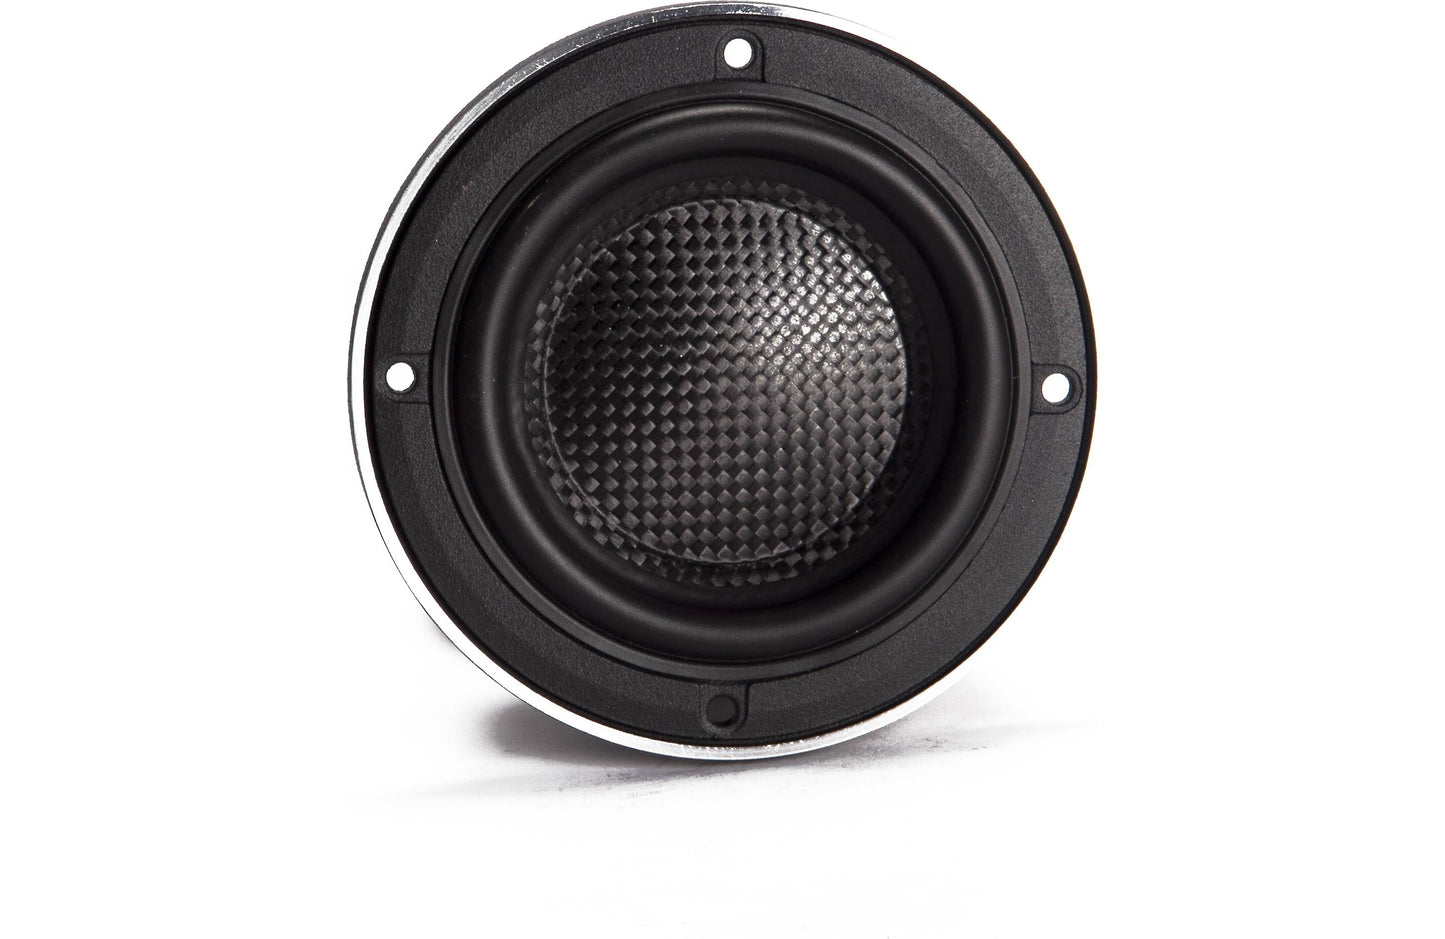 Morel Elate Carbon MM3 Elate Carbon Series 3-1/2" midrange speakers